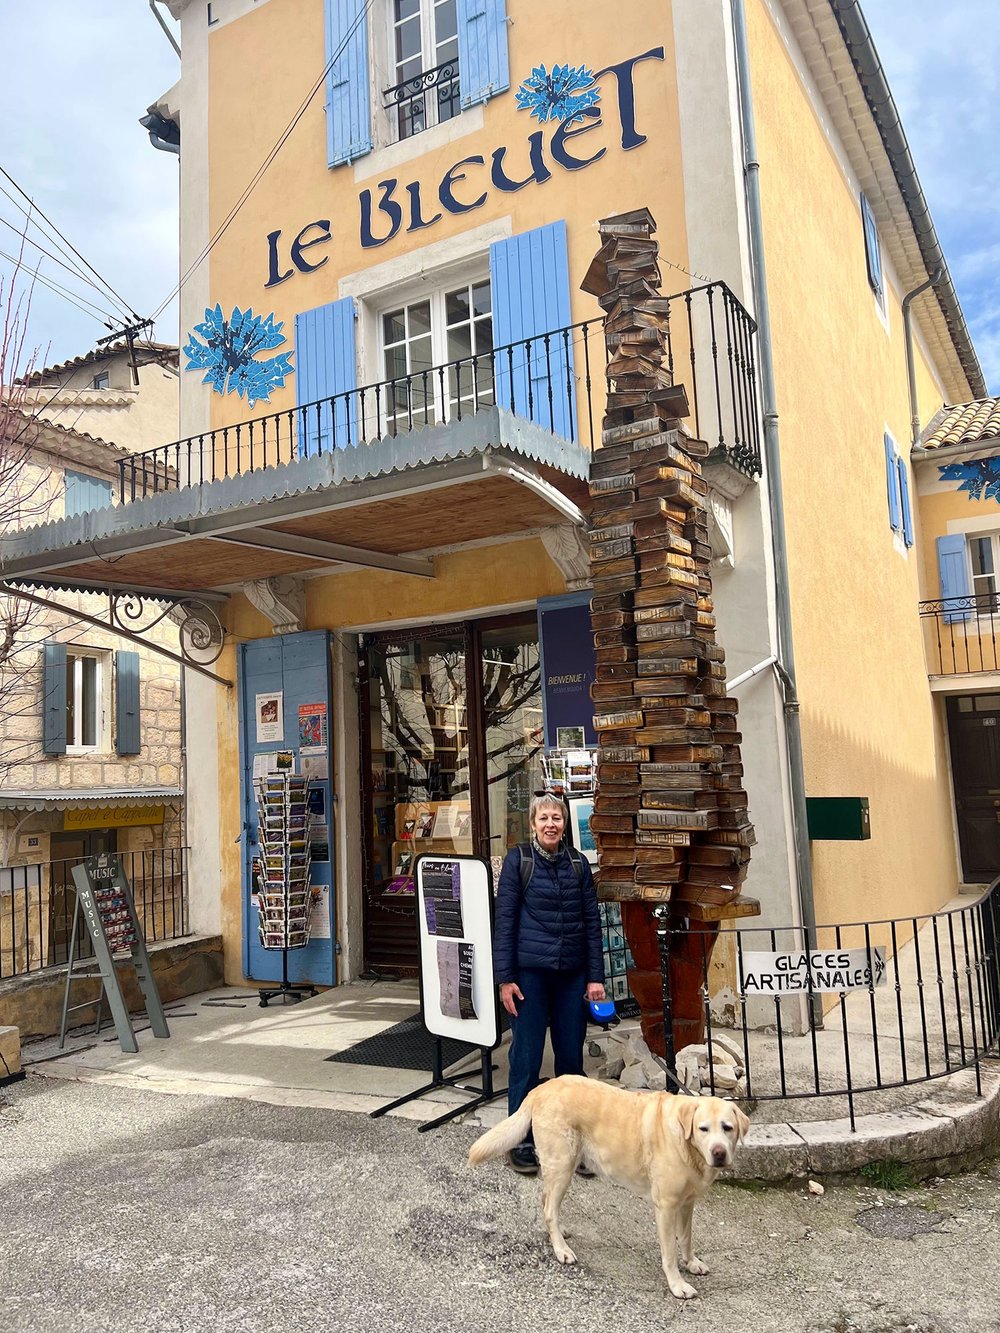 Le-Blueet-bookshop-Banon.jpg